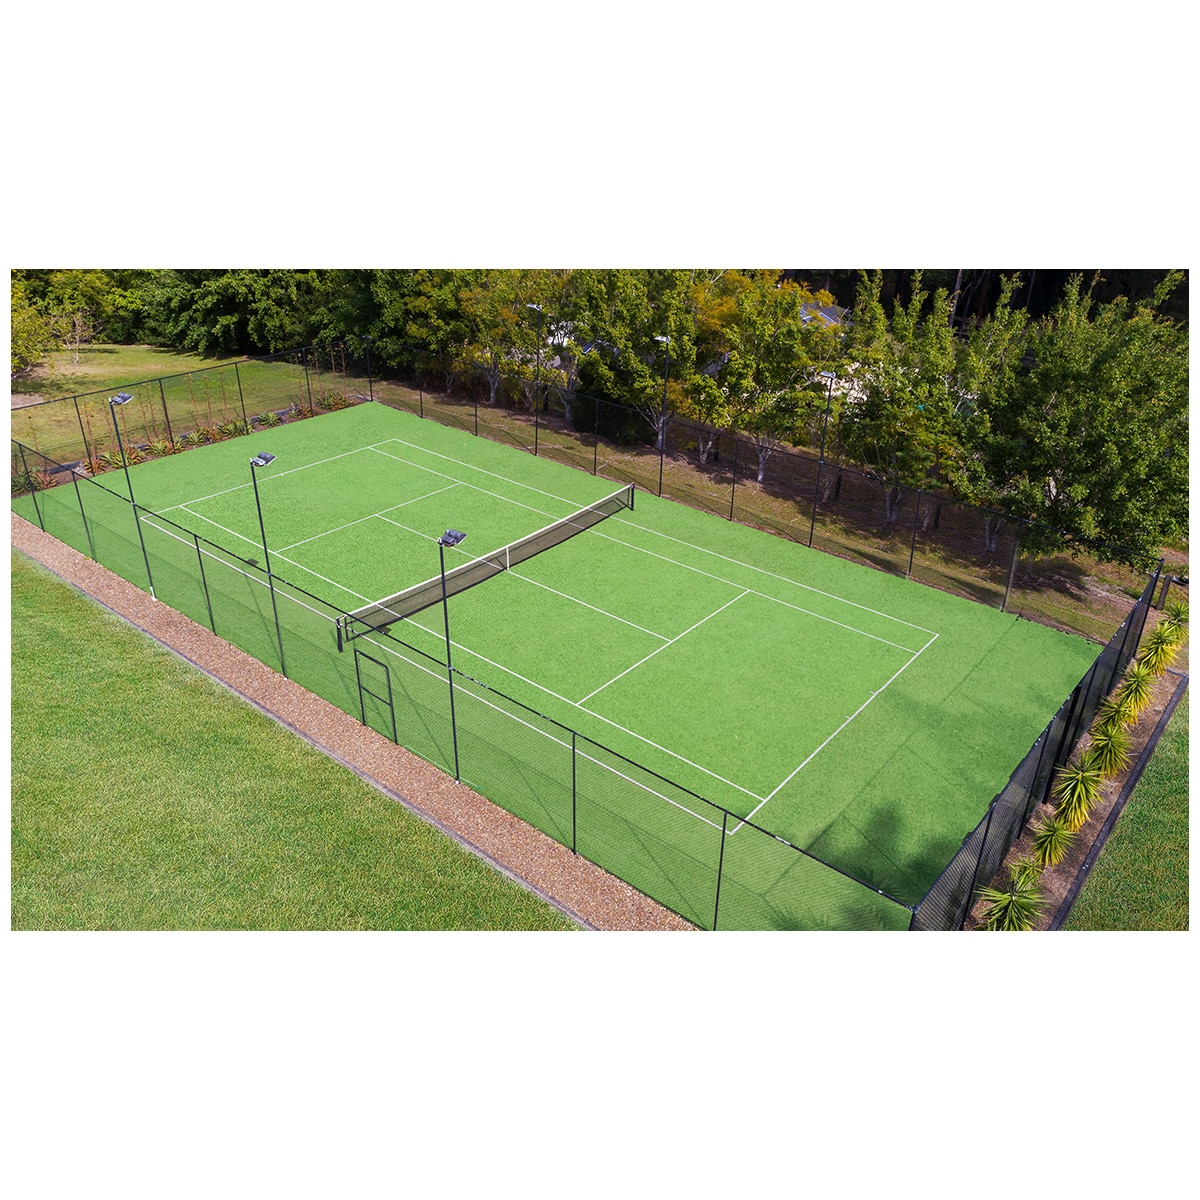 Urban Pro Tennis Court 34m x 16m artifical turf - Green